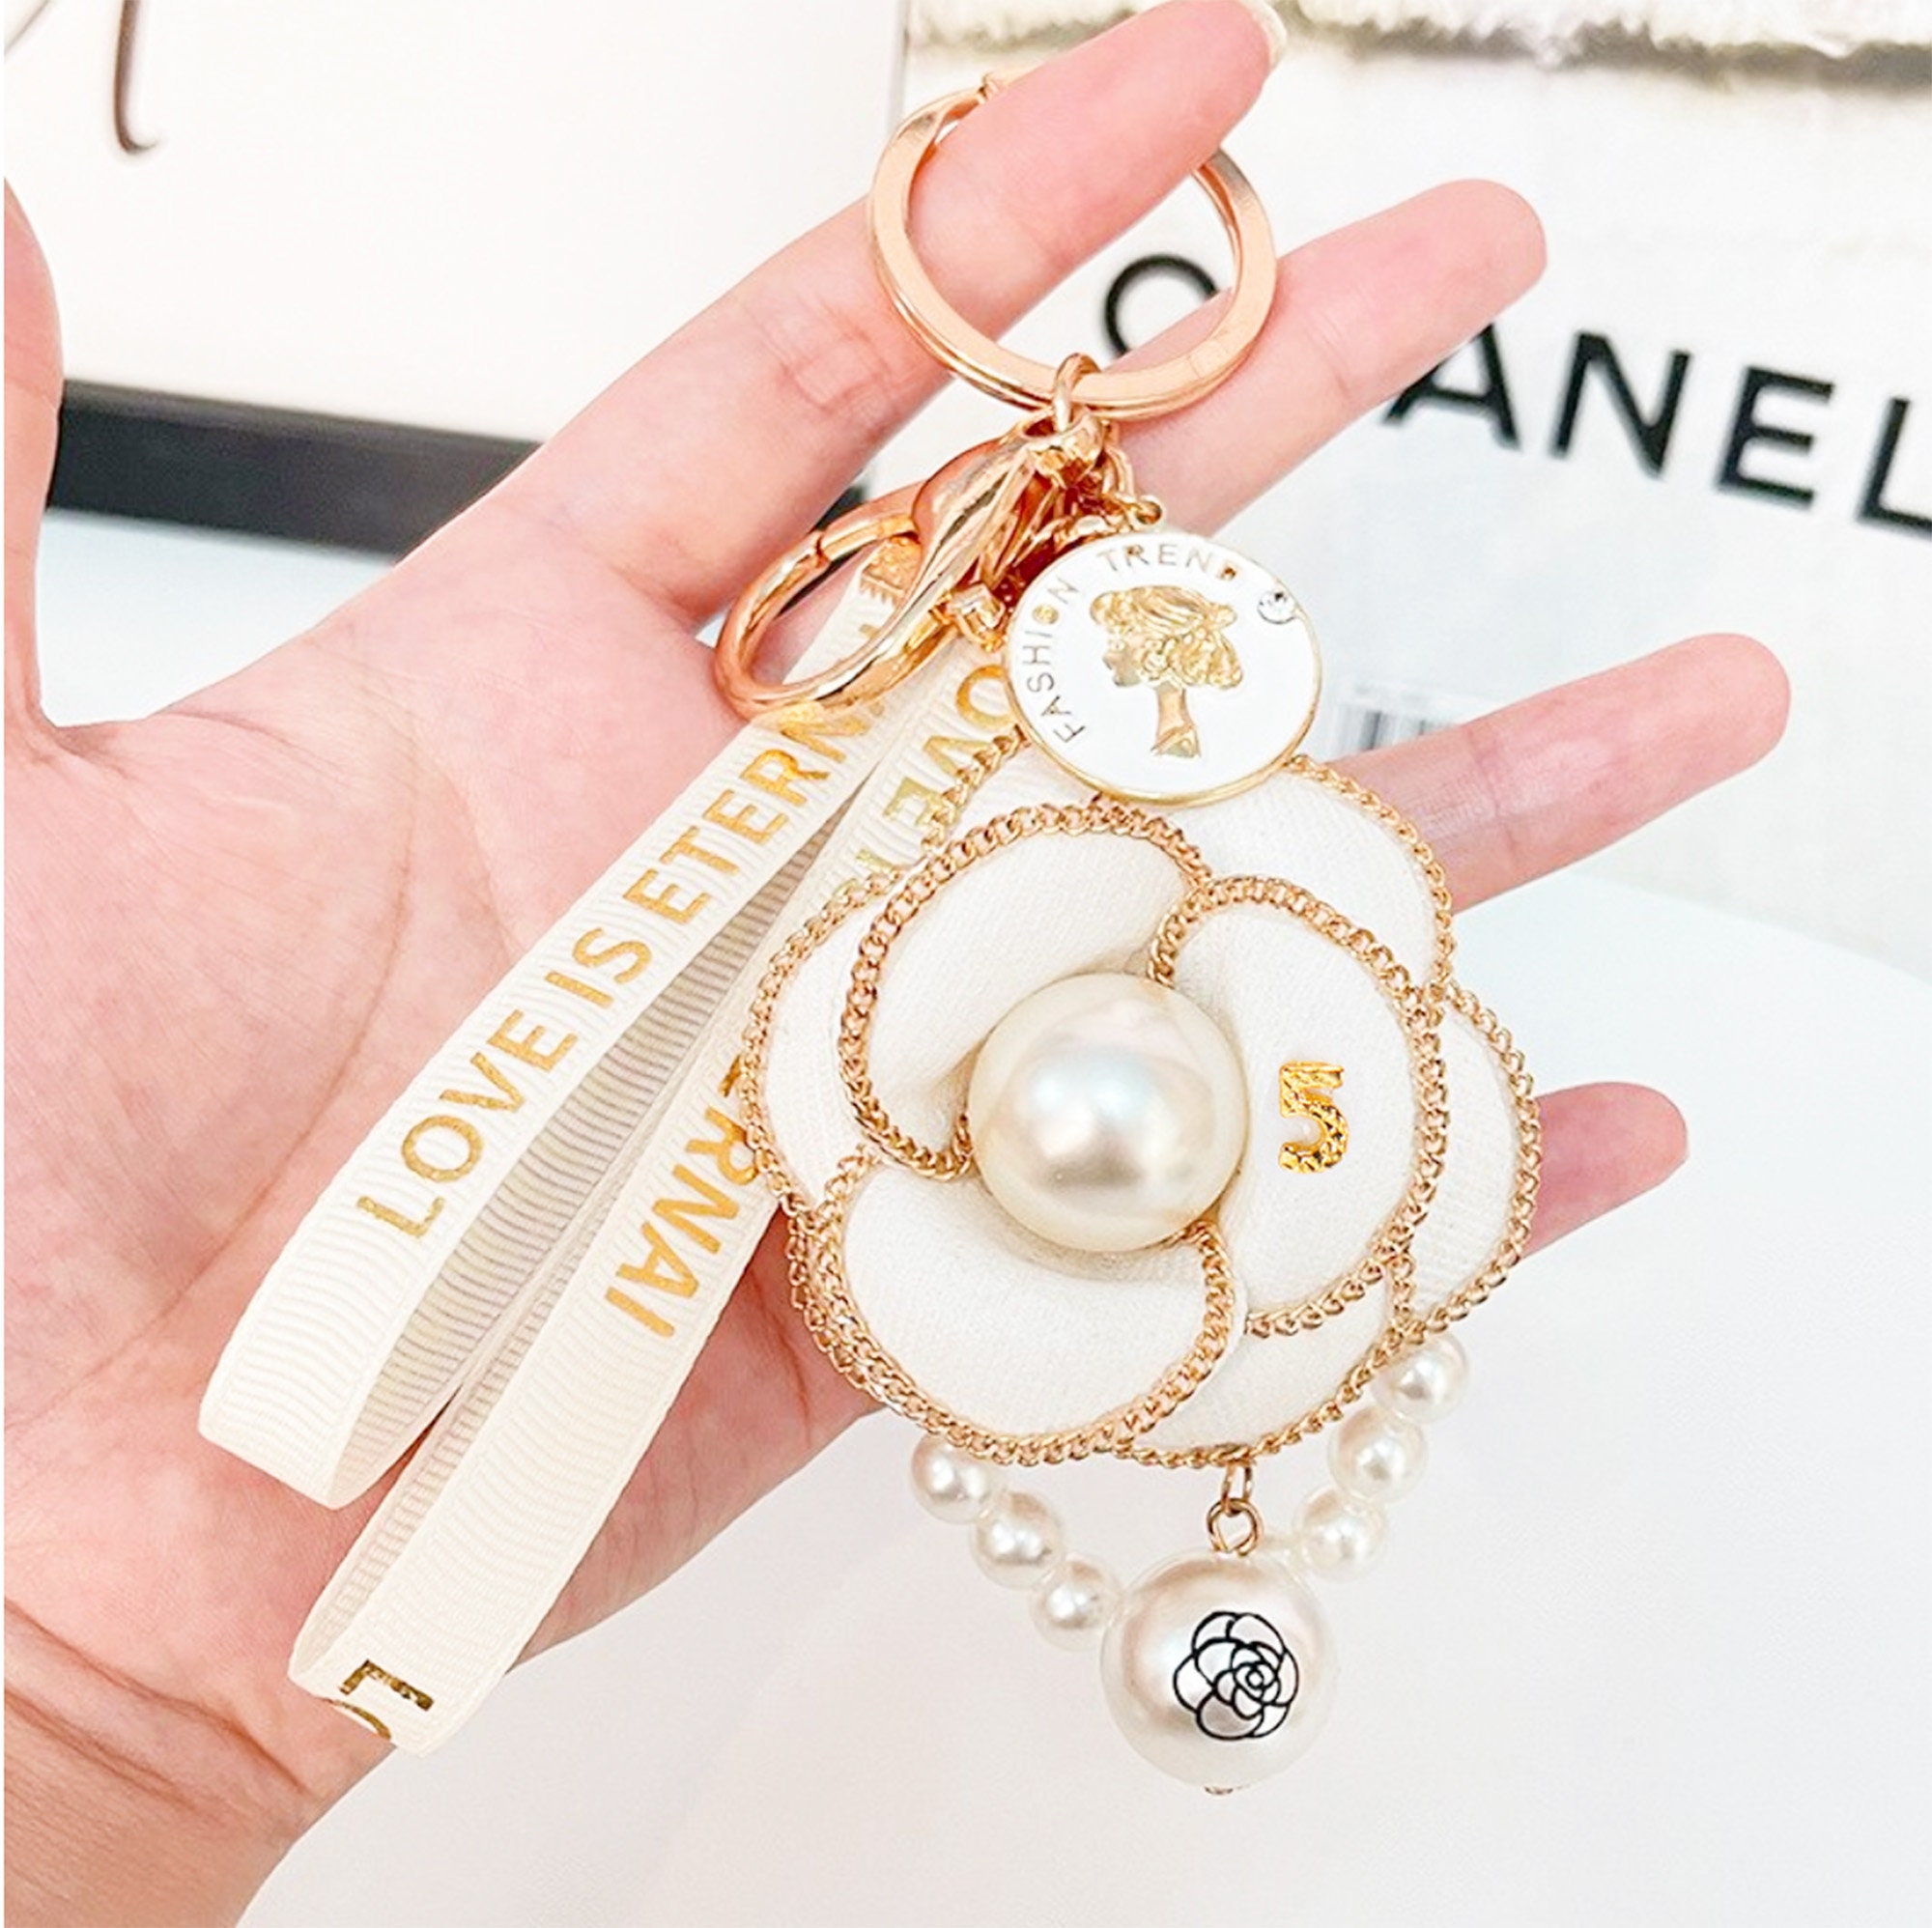 Chanel Enamel Heart Key Chain Bag Charm, Chanel Accessories